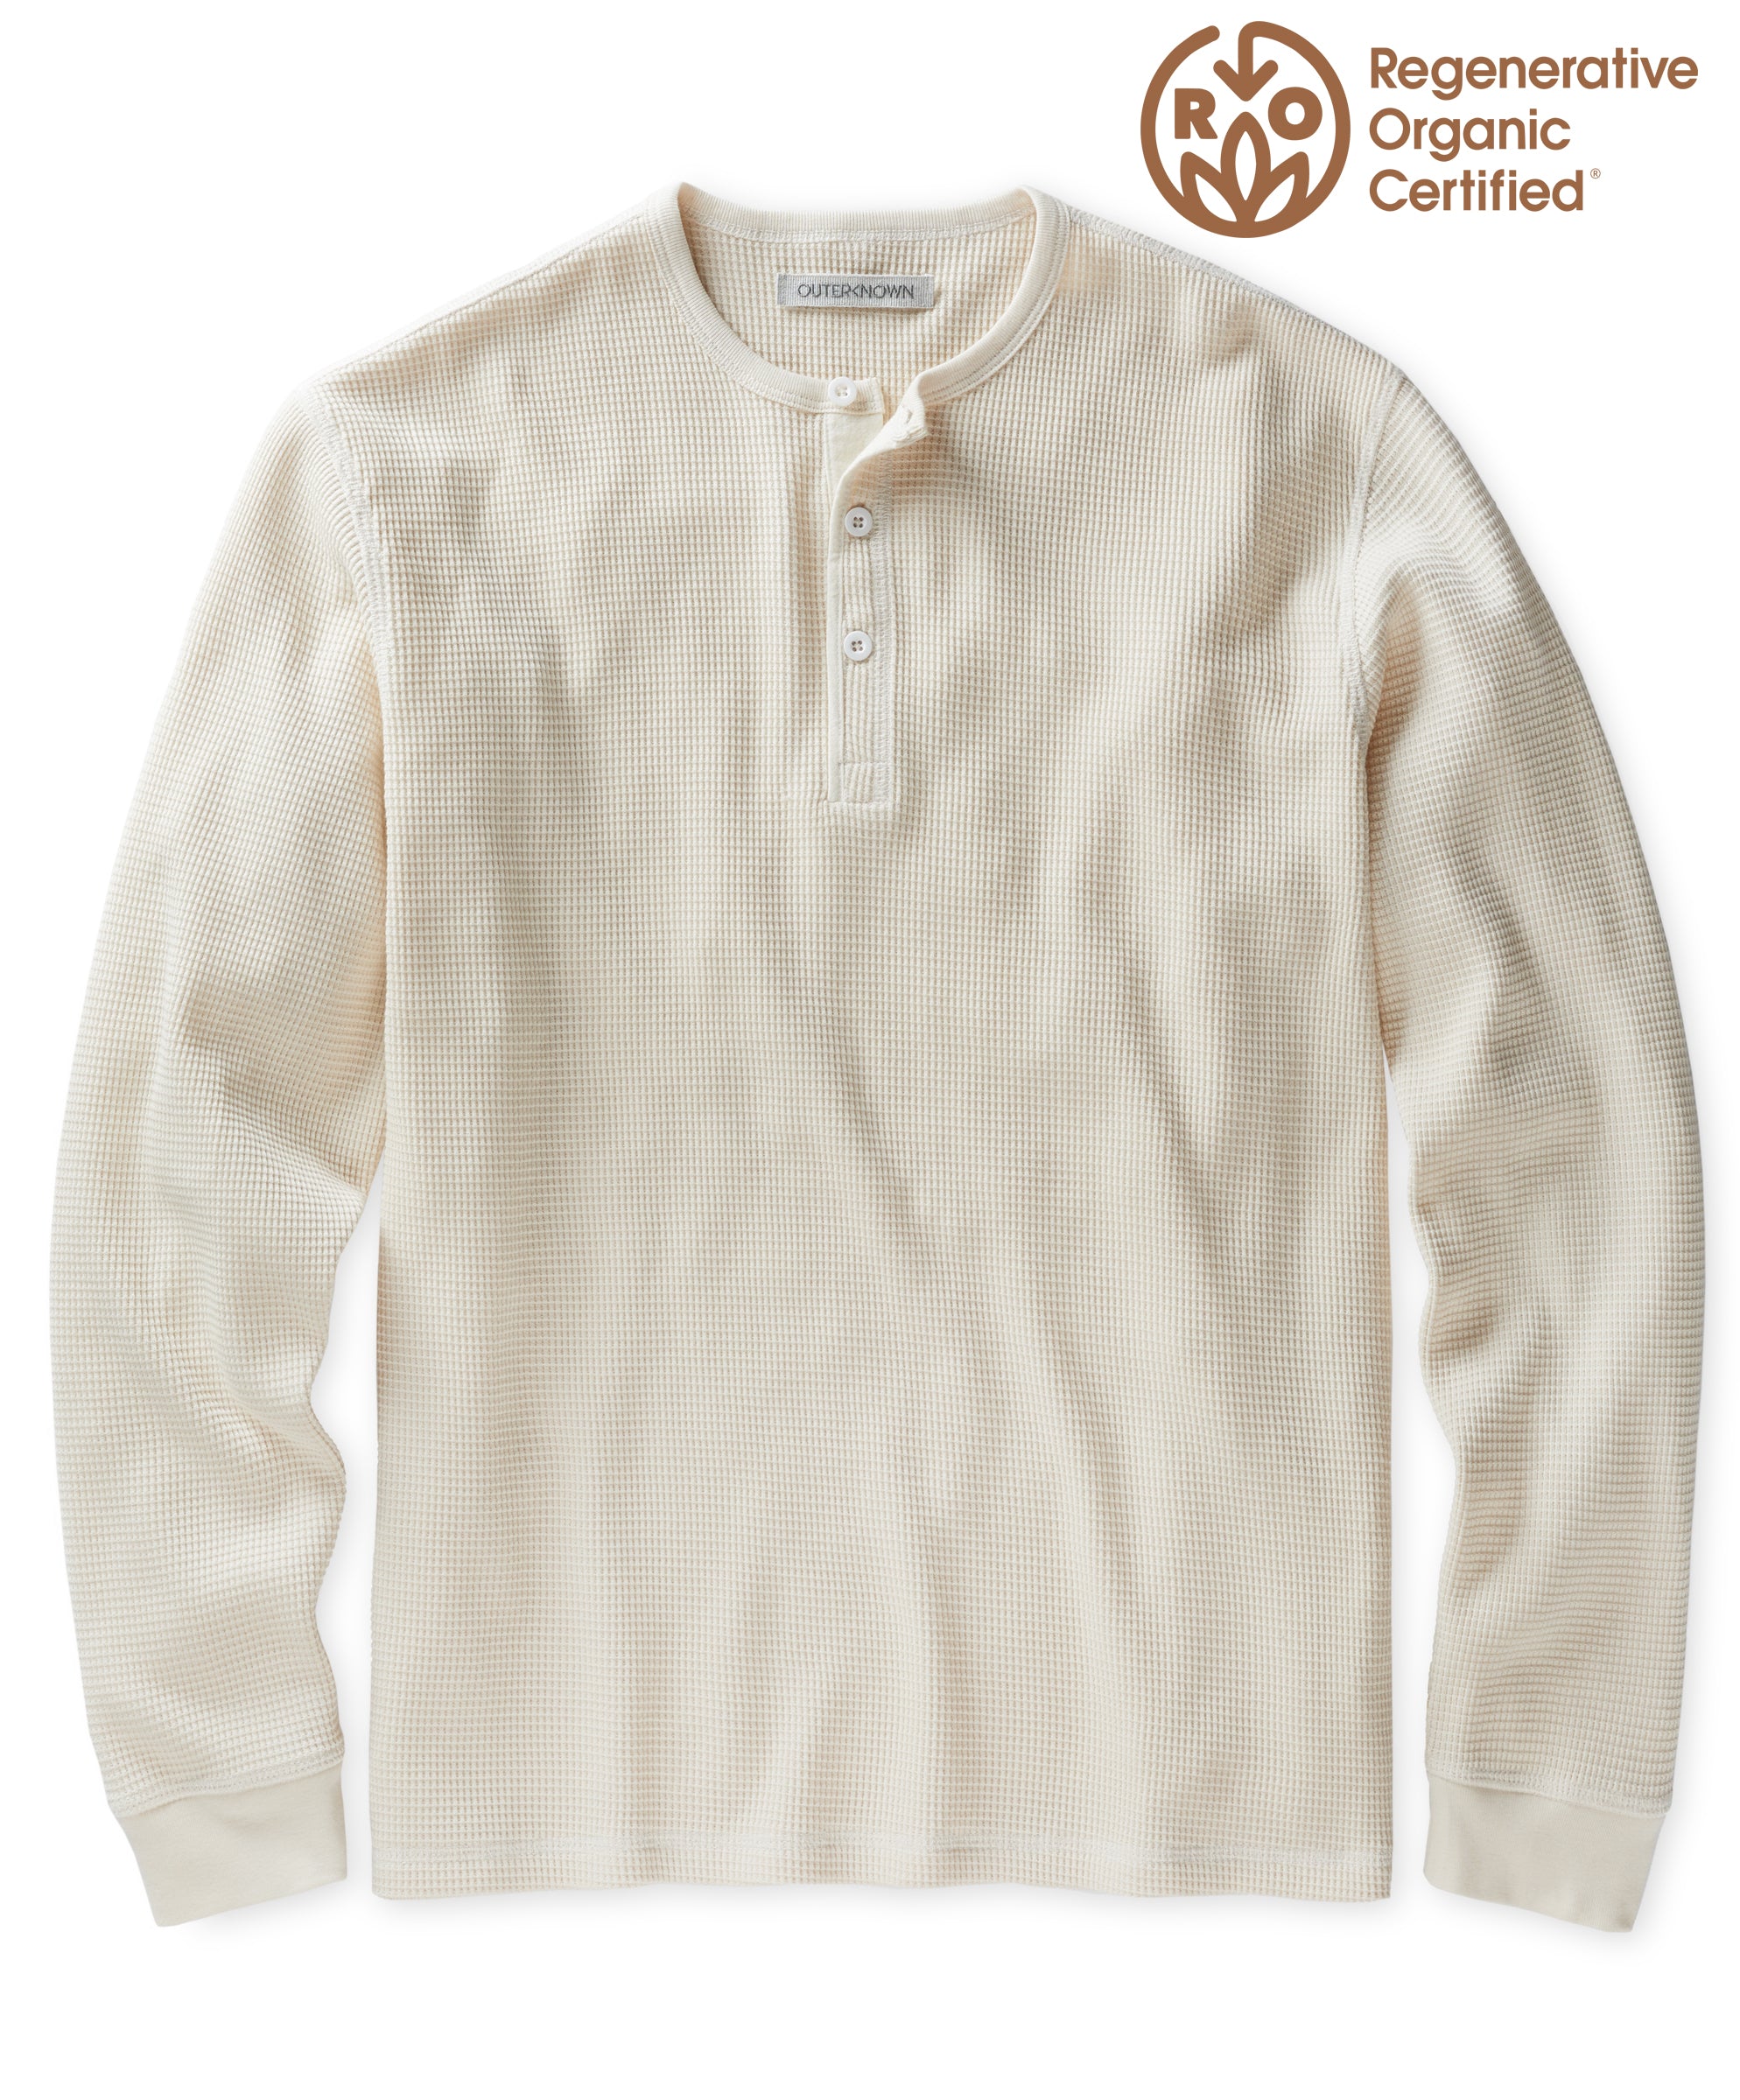 Vintage Heavyweight Cotton Long Sleeve Henley Neck Shirt - White | Bronson White / S